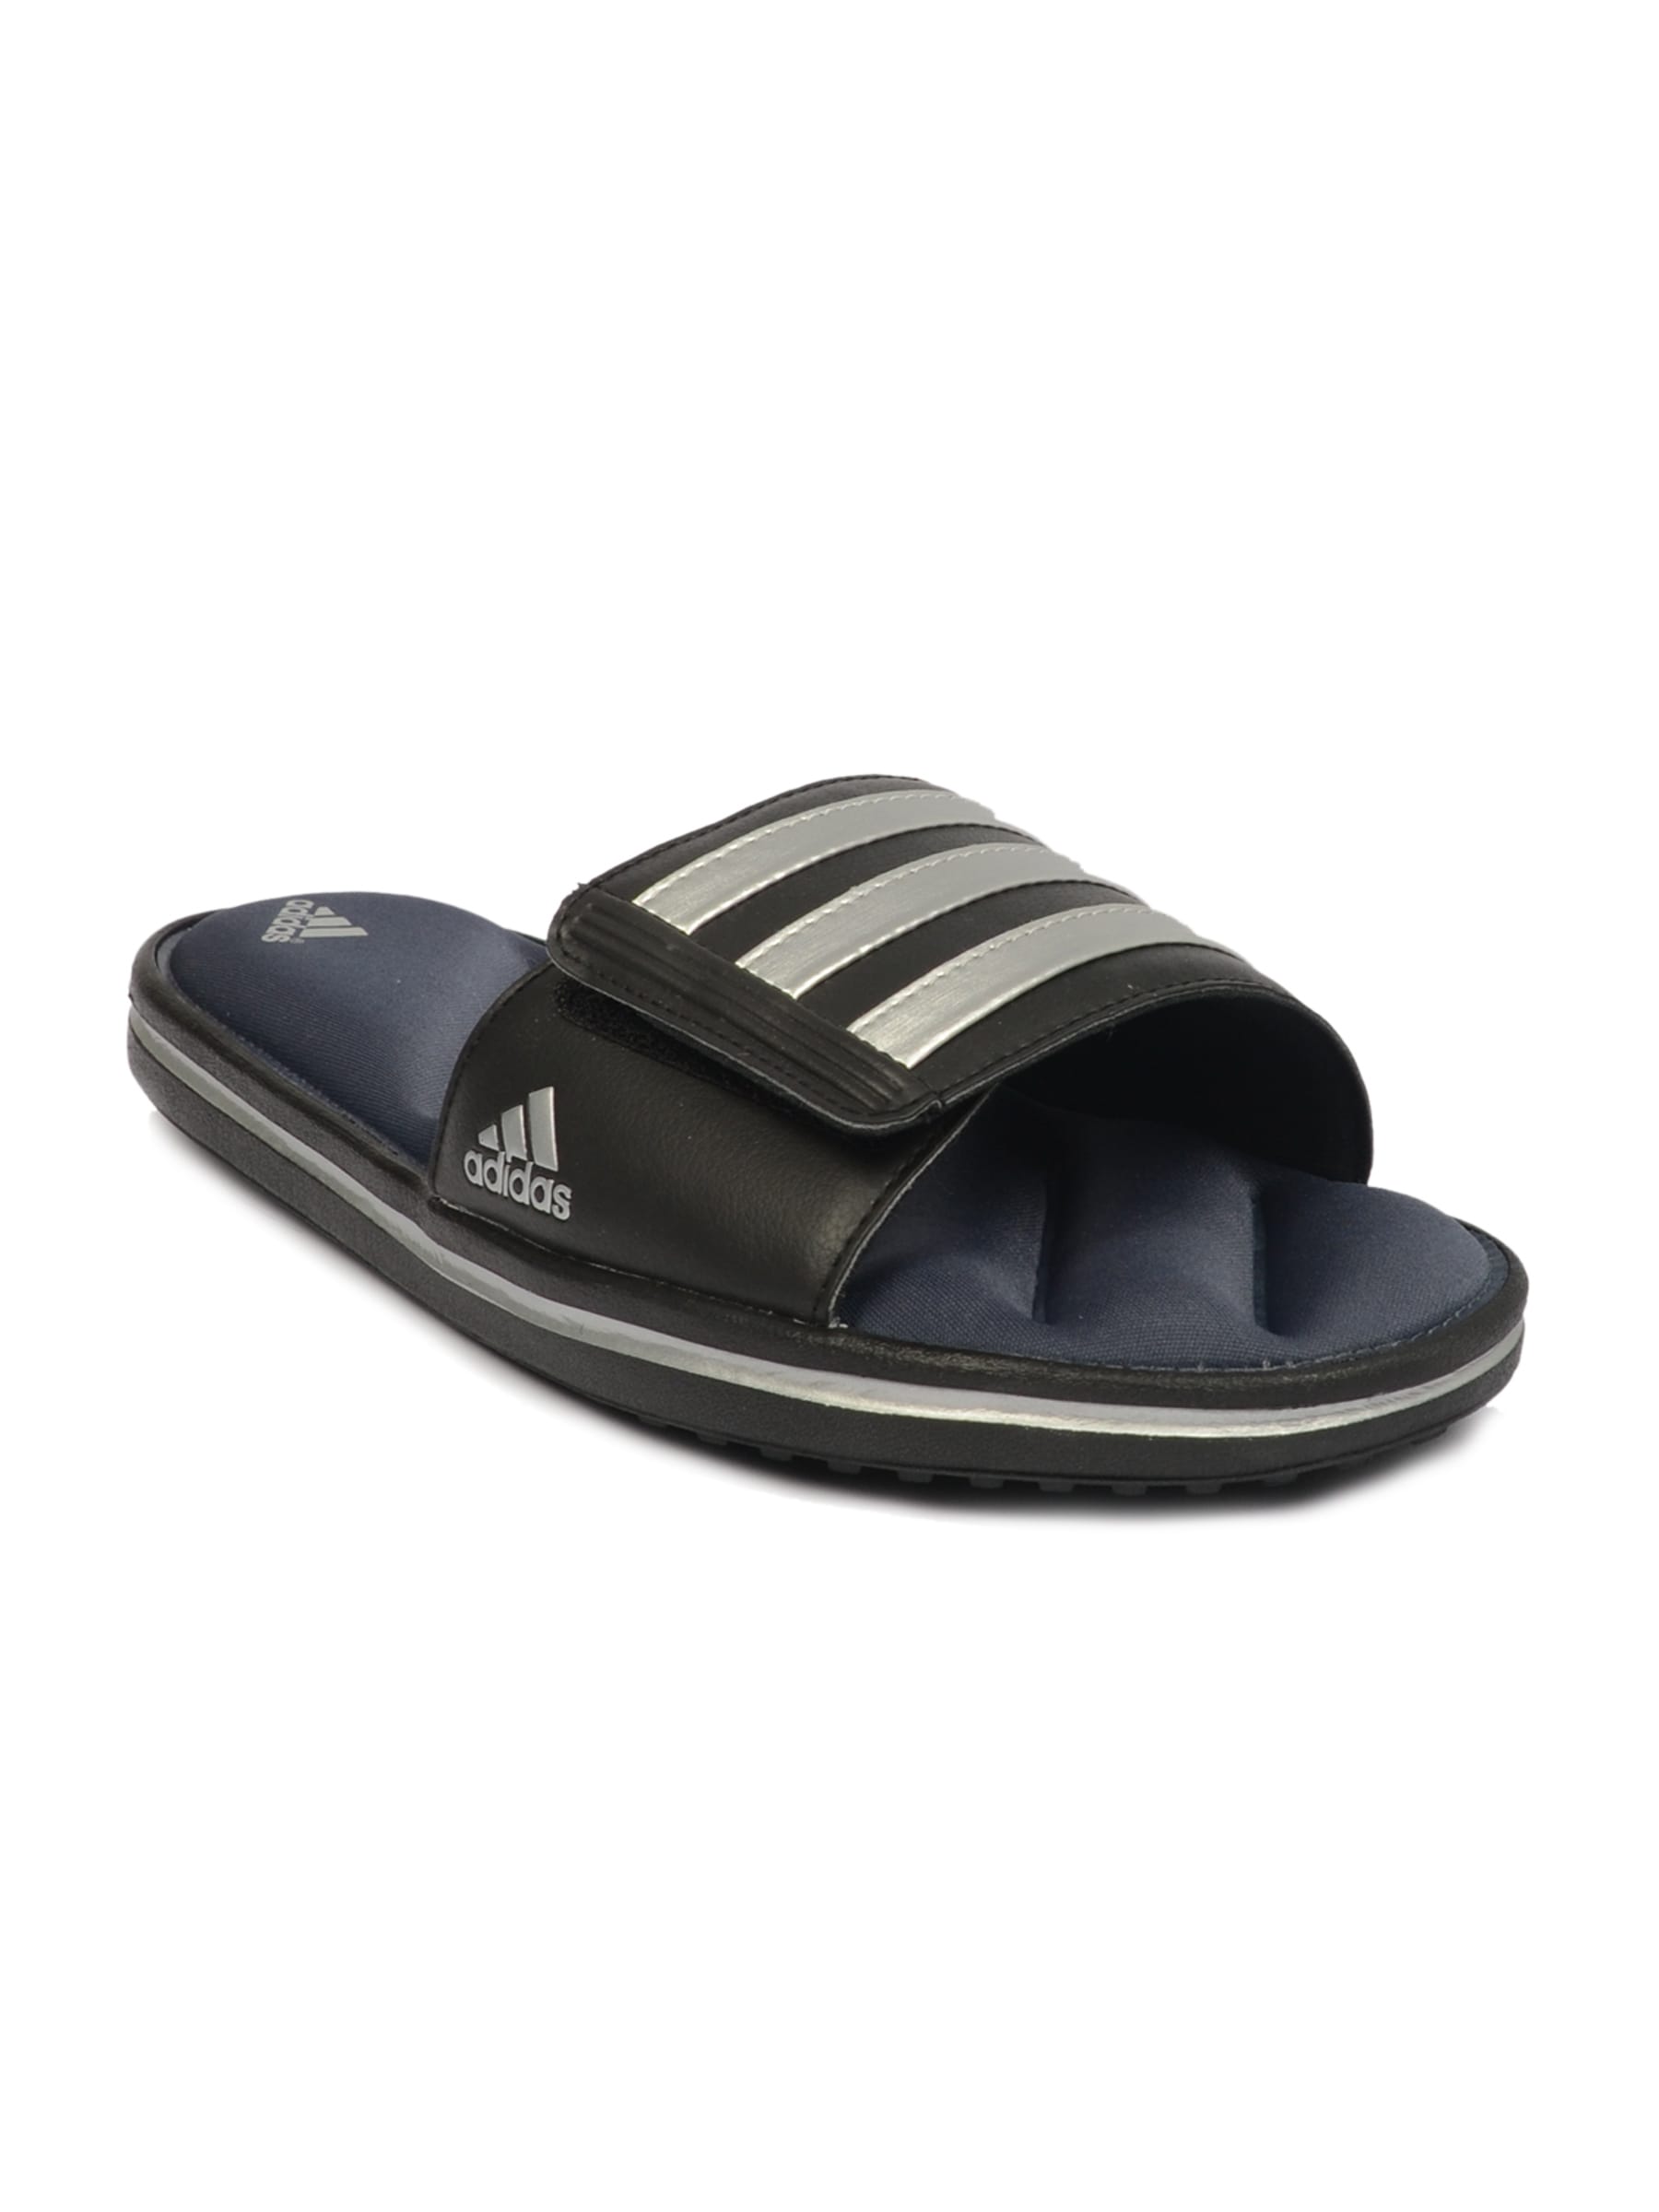 ADIDAS Men Zeitfrei Slide Ff Black Sandals